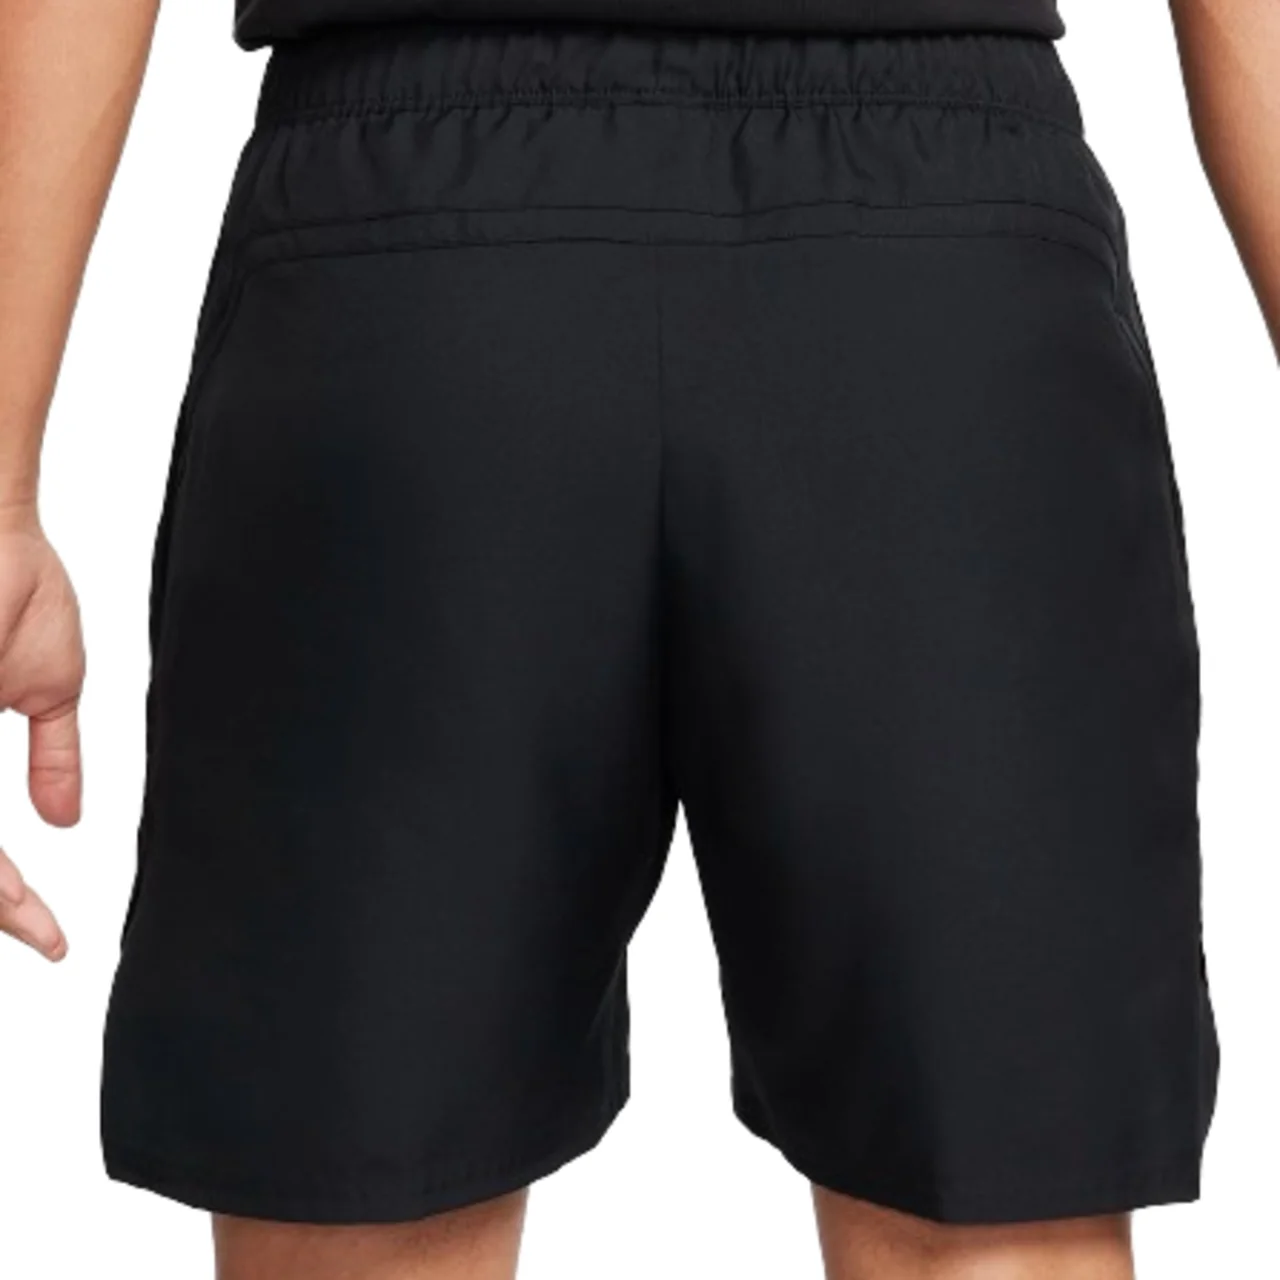 Nike Court Victory 7'' Shorts Black/White